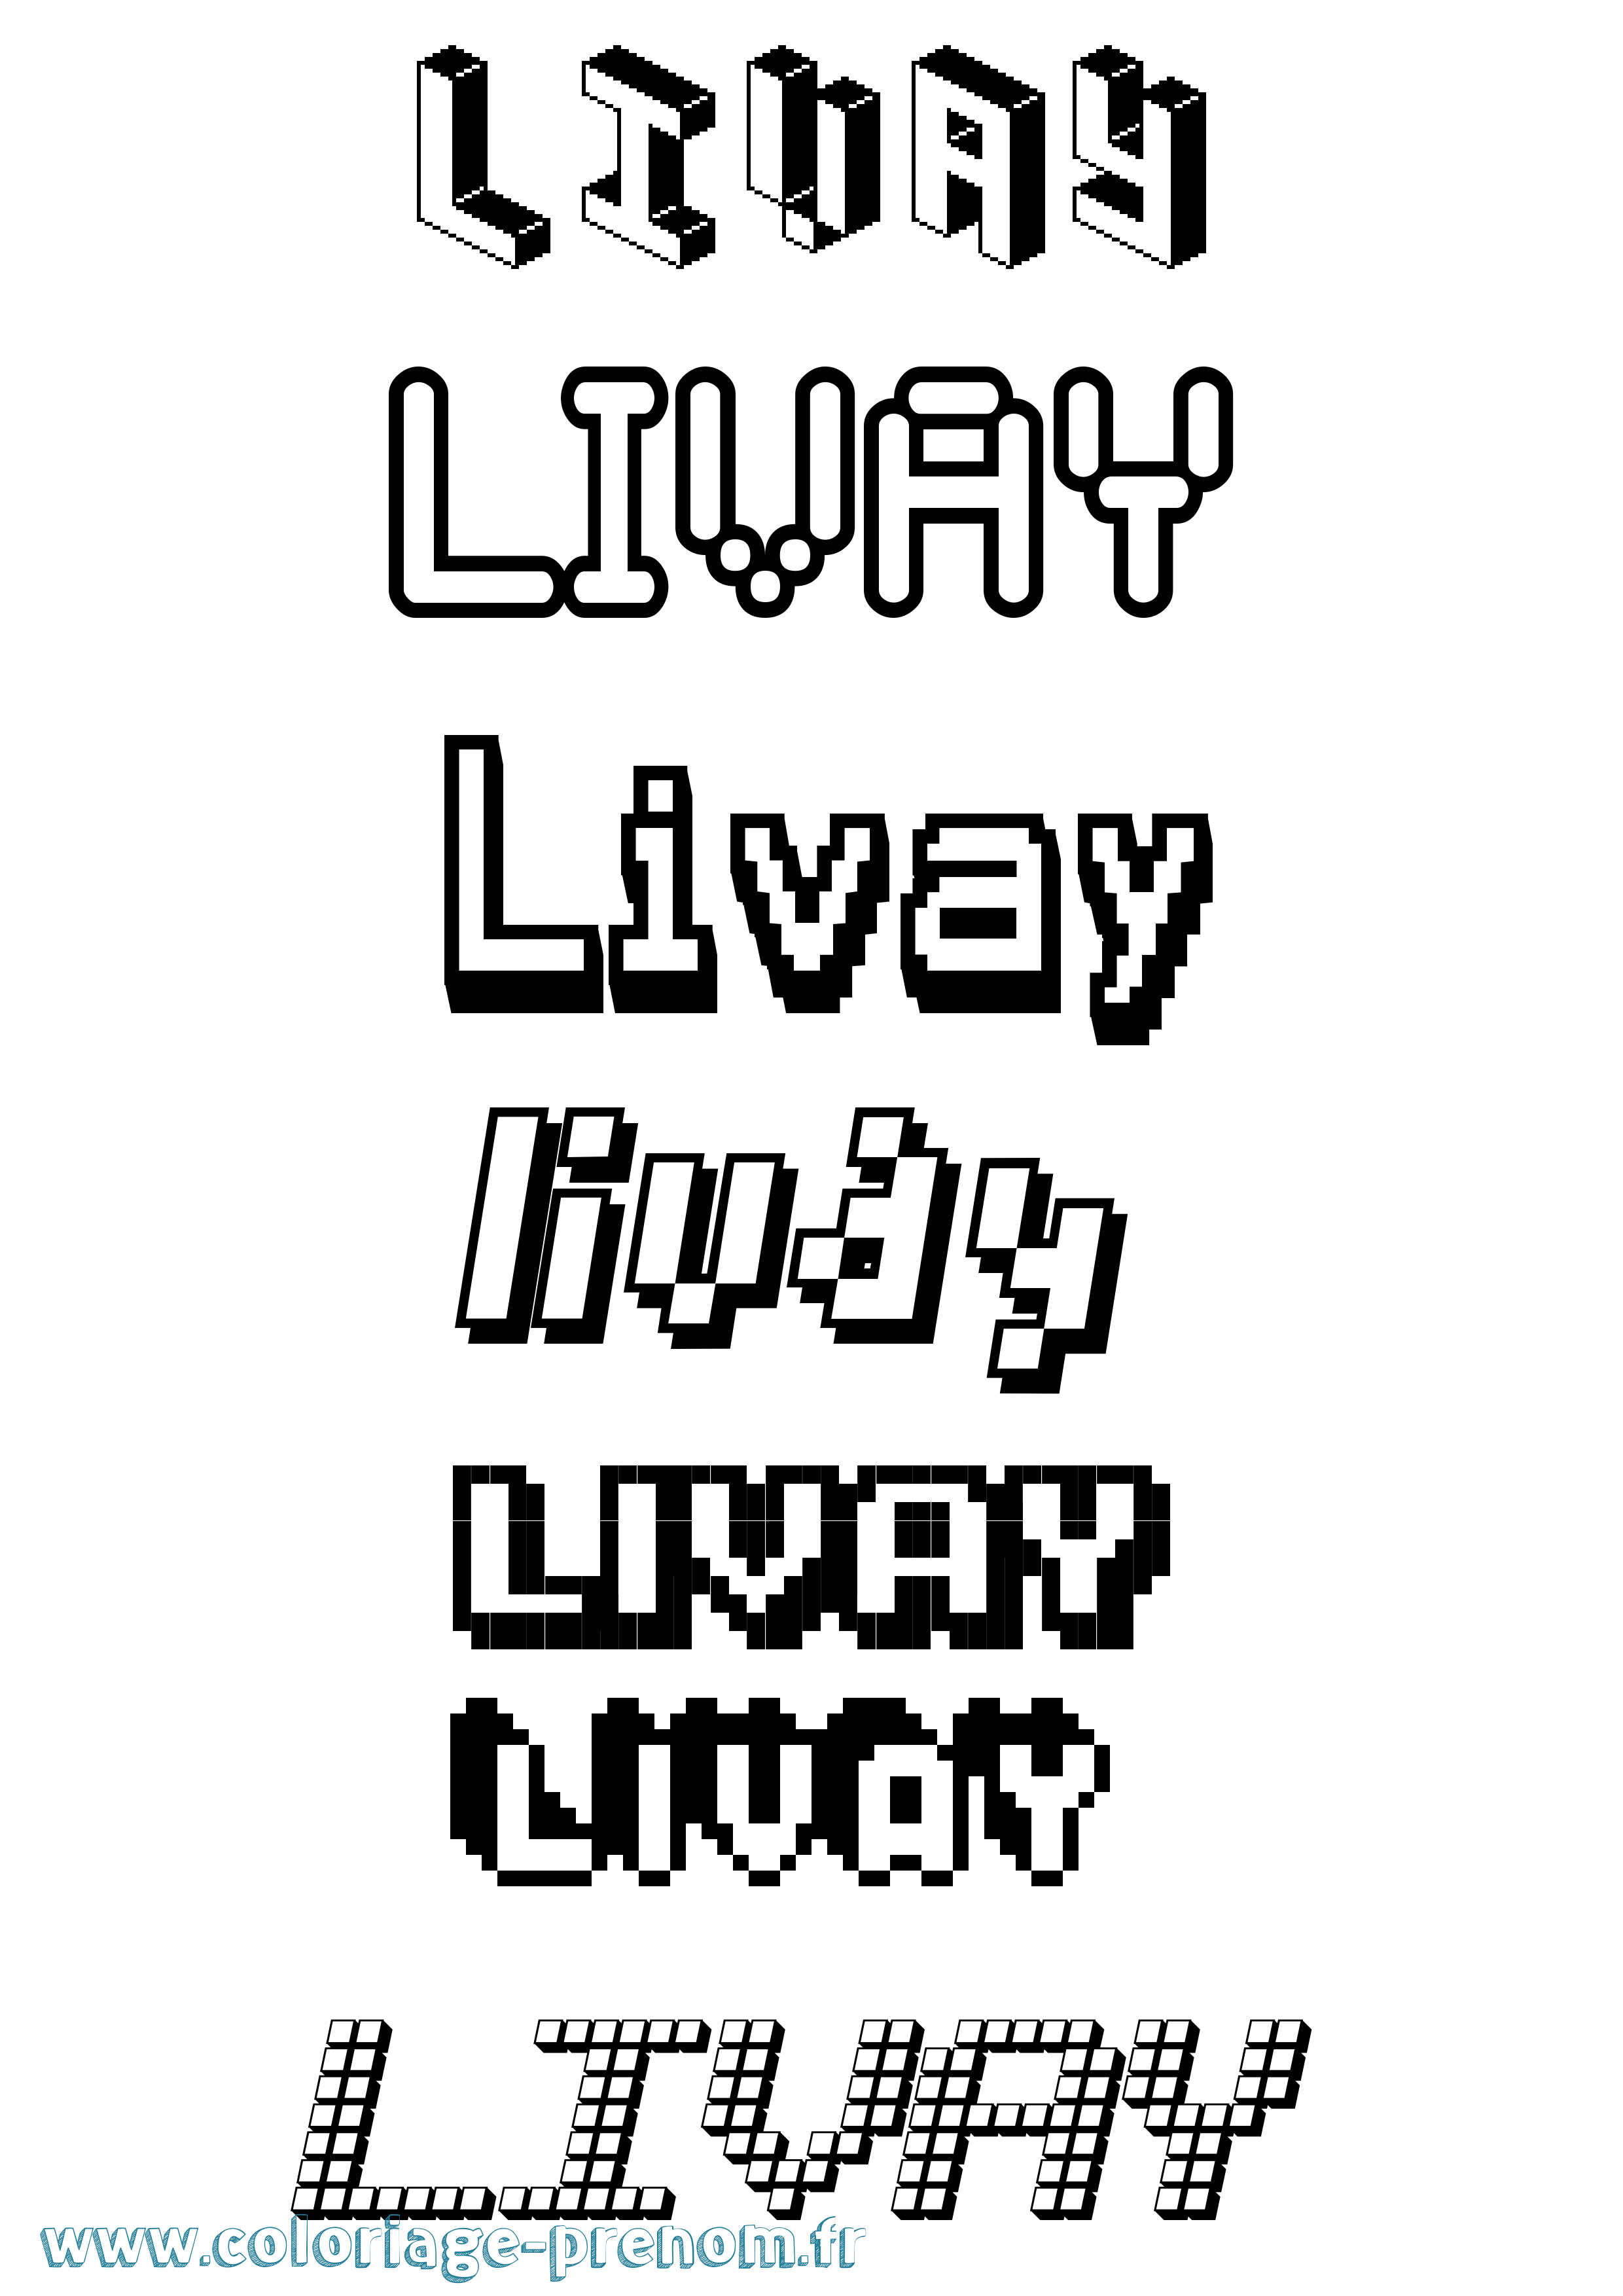 Coloriage prénom Livay Pixel